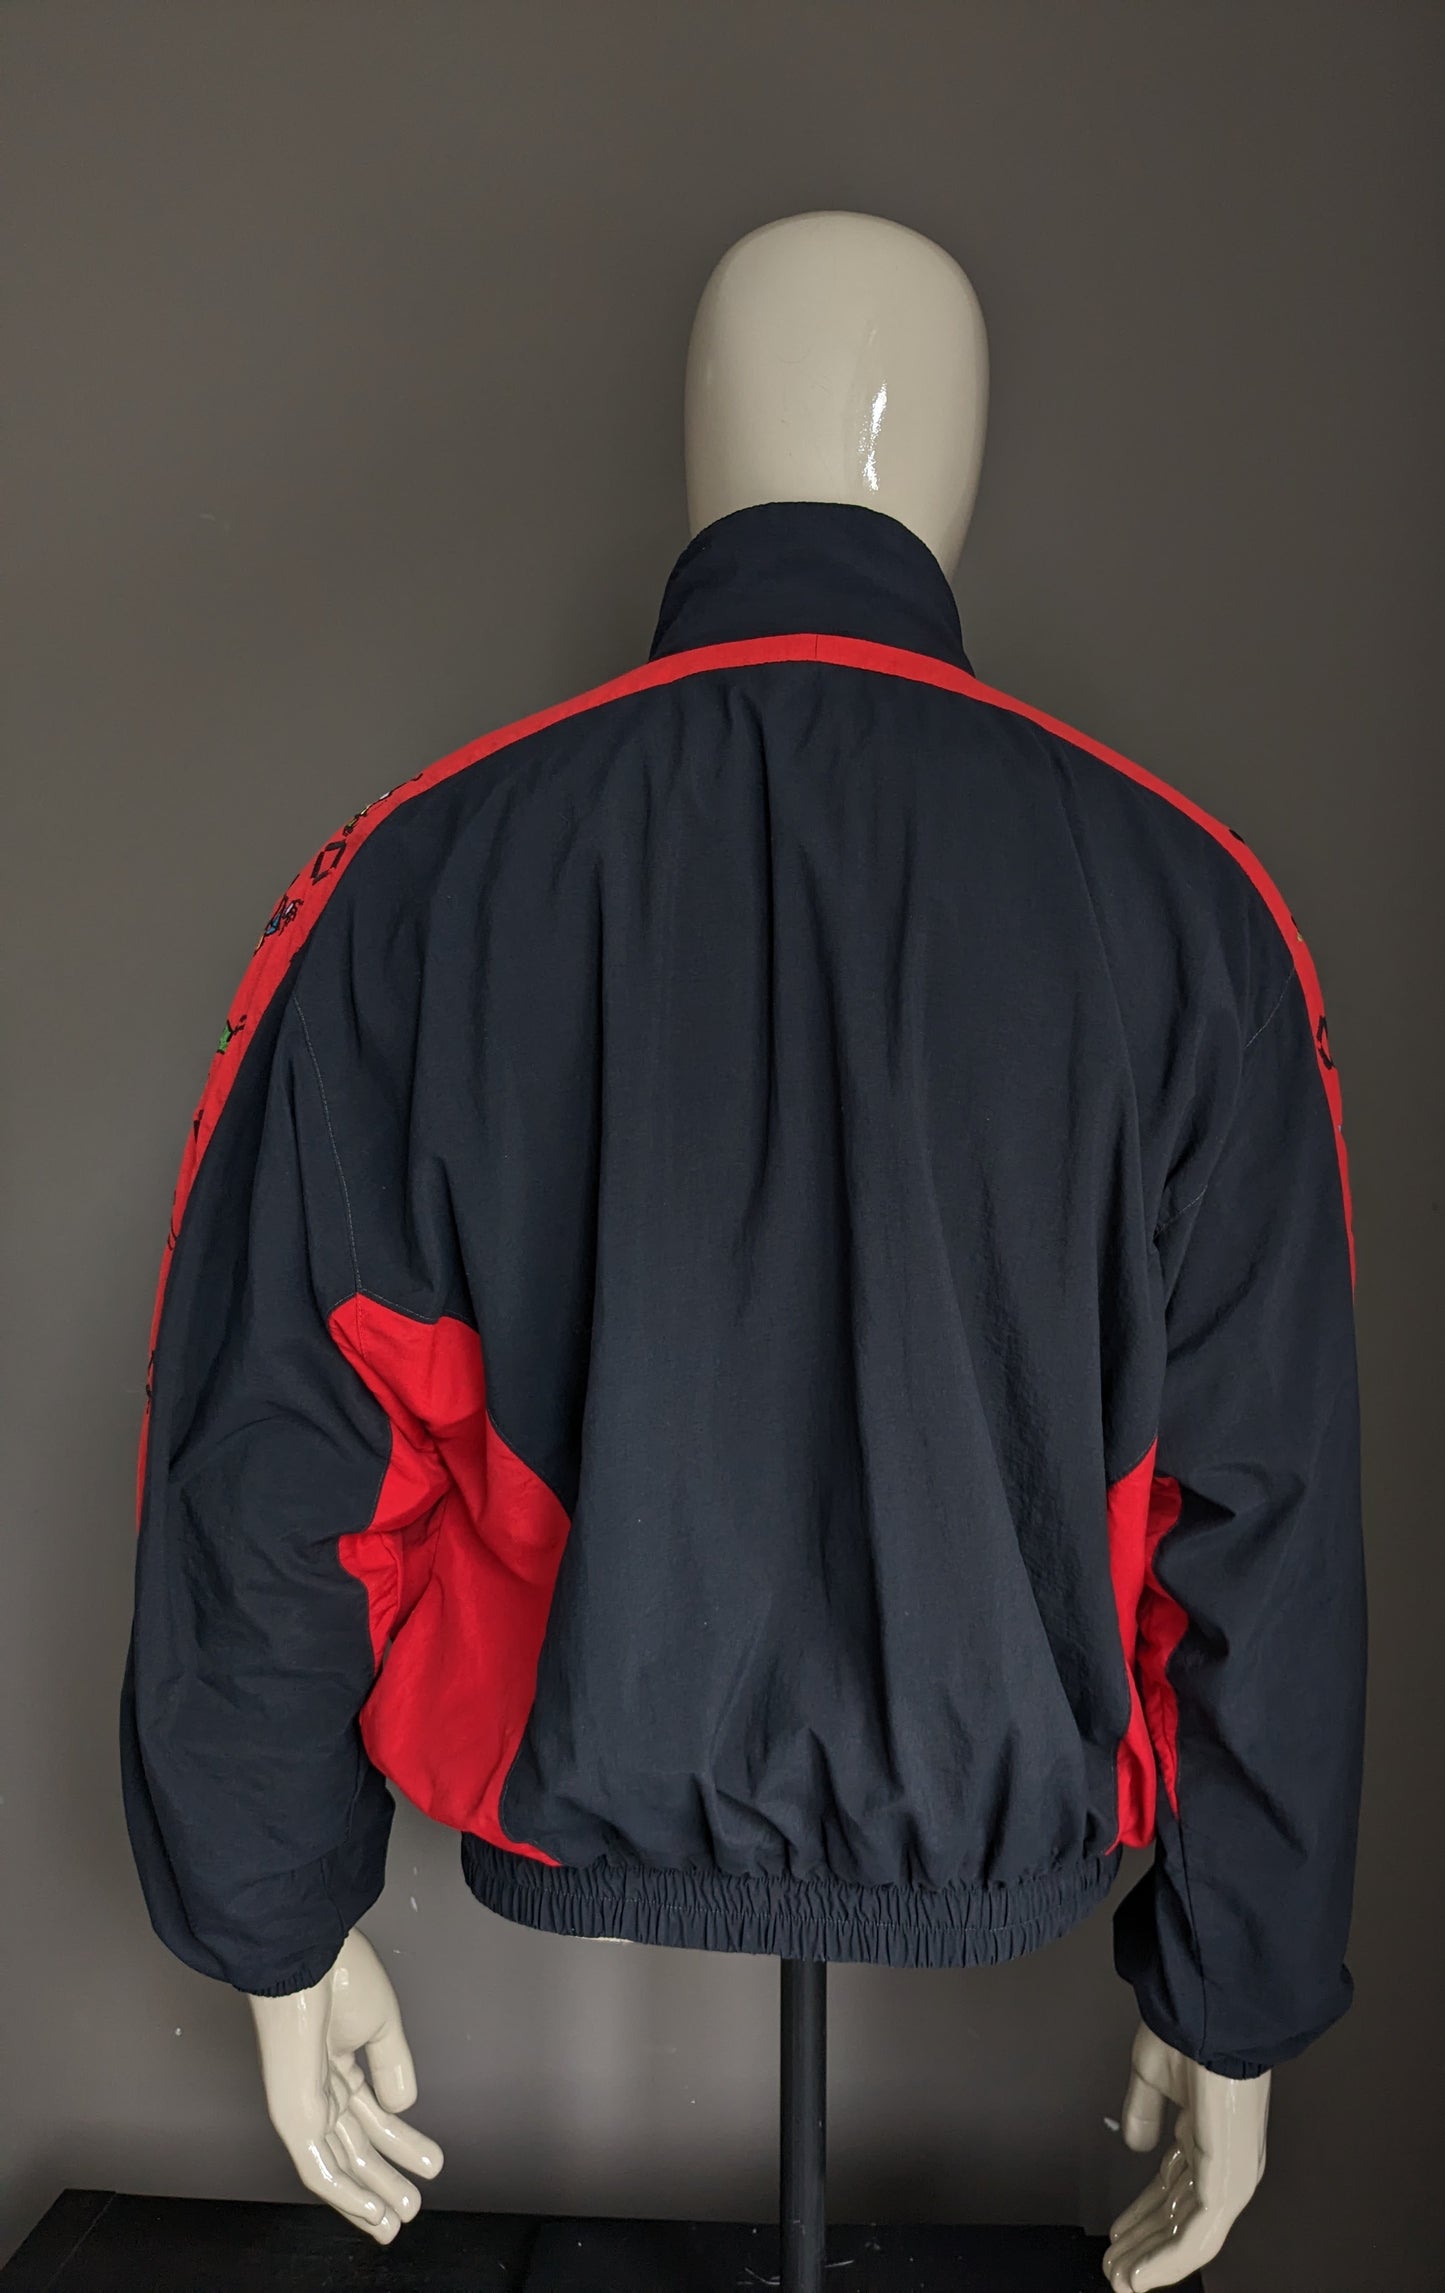 Vintage 80s-90s Württembic Sport Jack. Colore rosso nero. Taglia M / L.